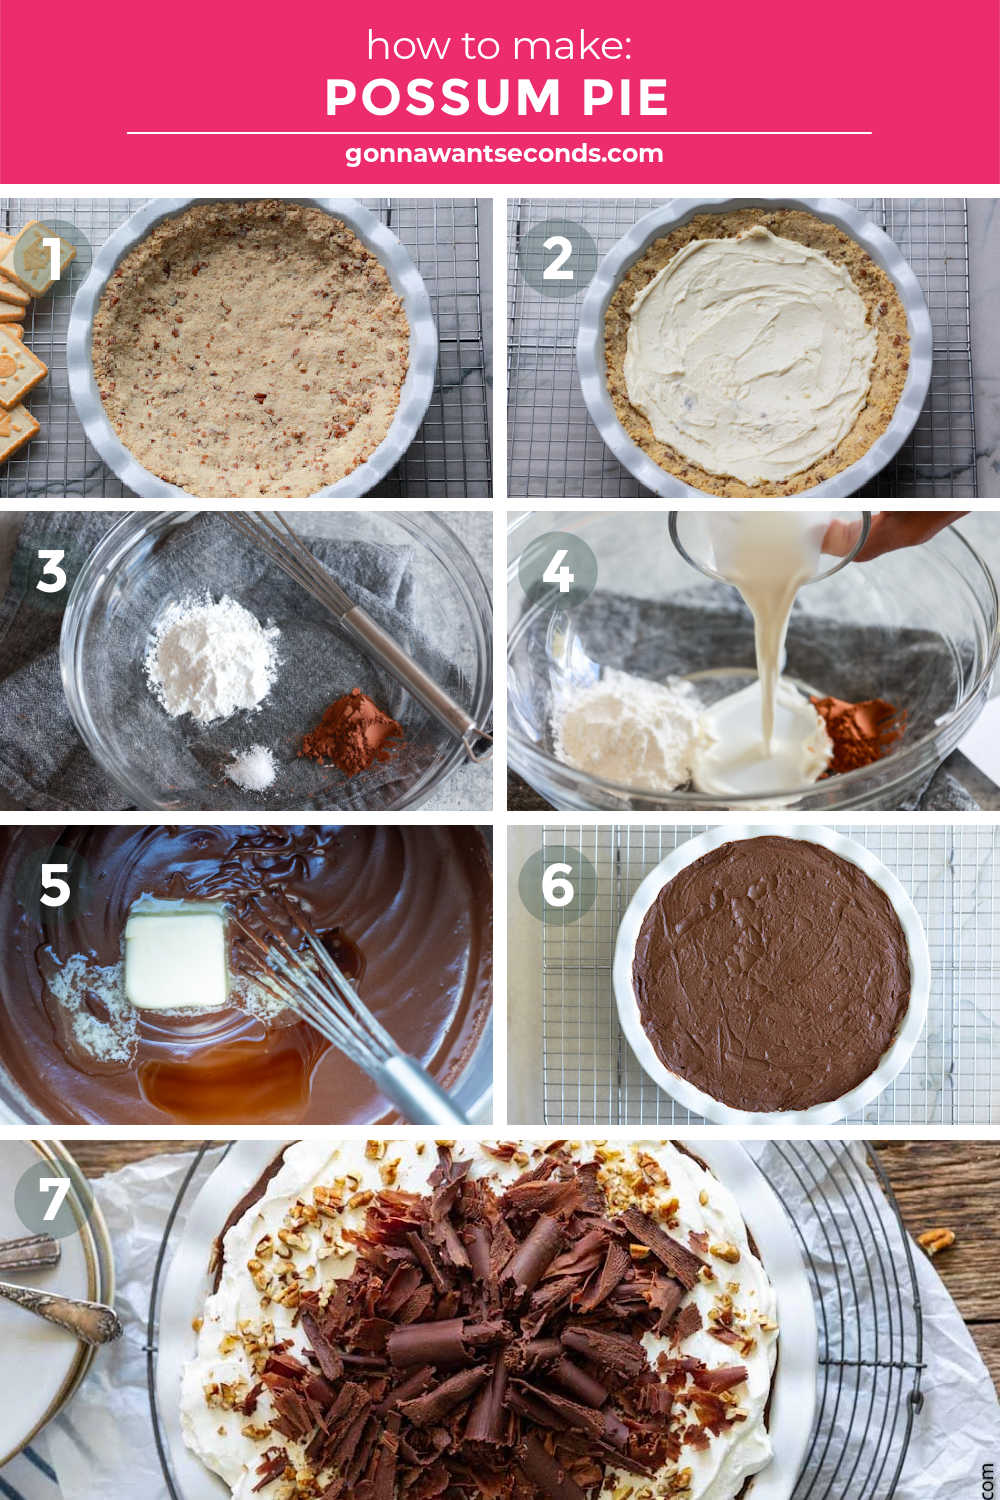 Step by step how to make possum pie